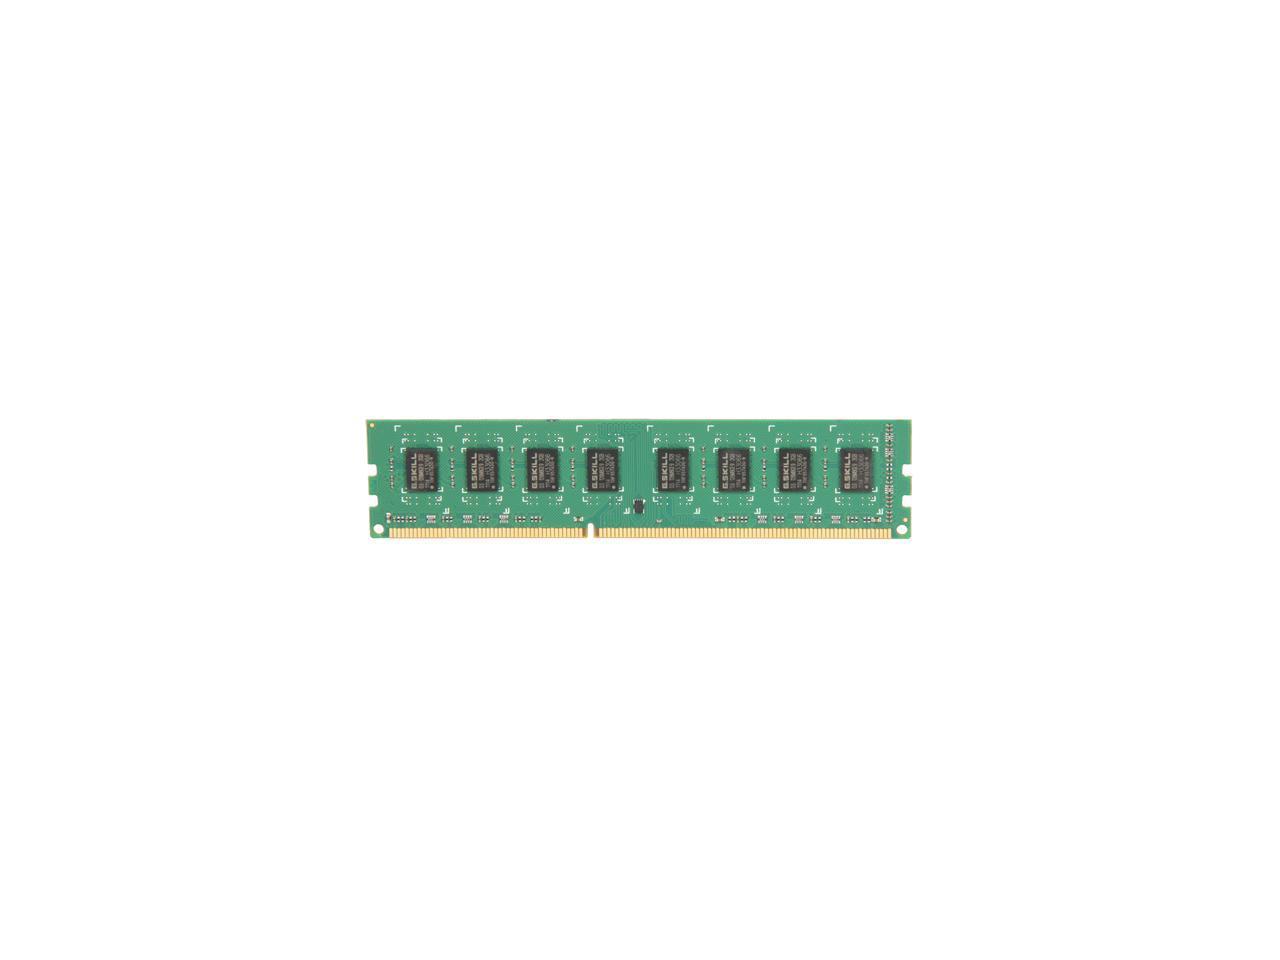 G.SKILL 2GB 240-Pin DDR3 SDRAM DDR3 1333 (PC3 10600) Desktop Memory Model F3-10600CL9S-2GBNT